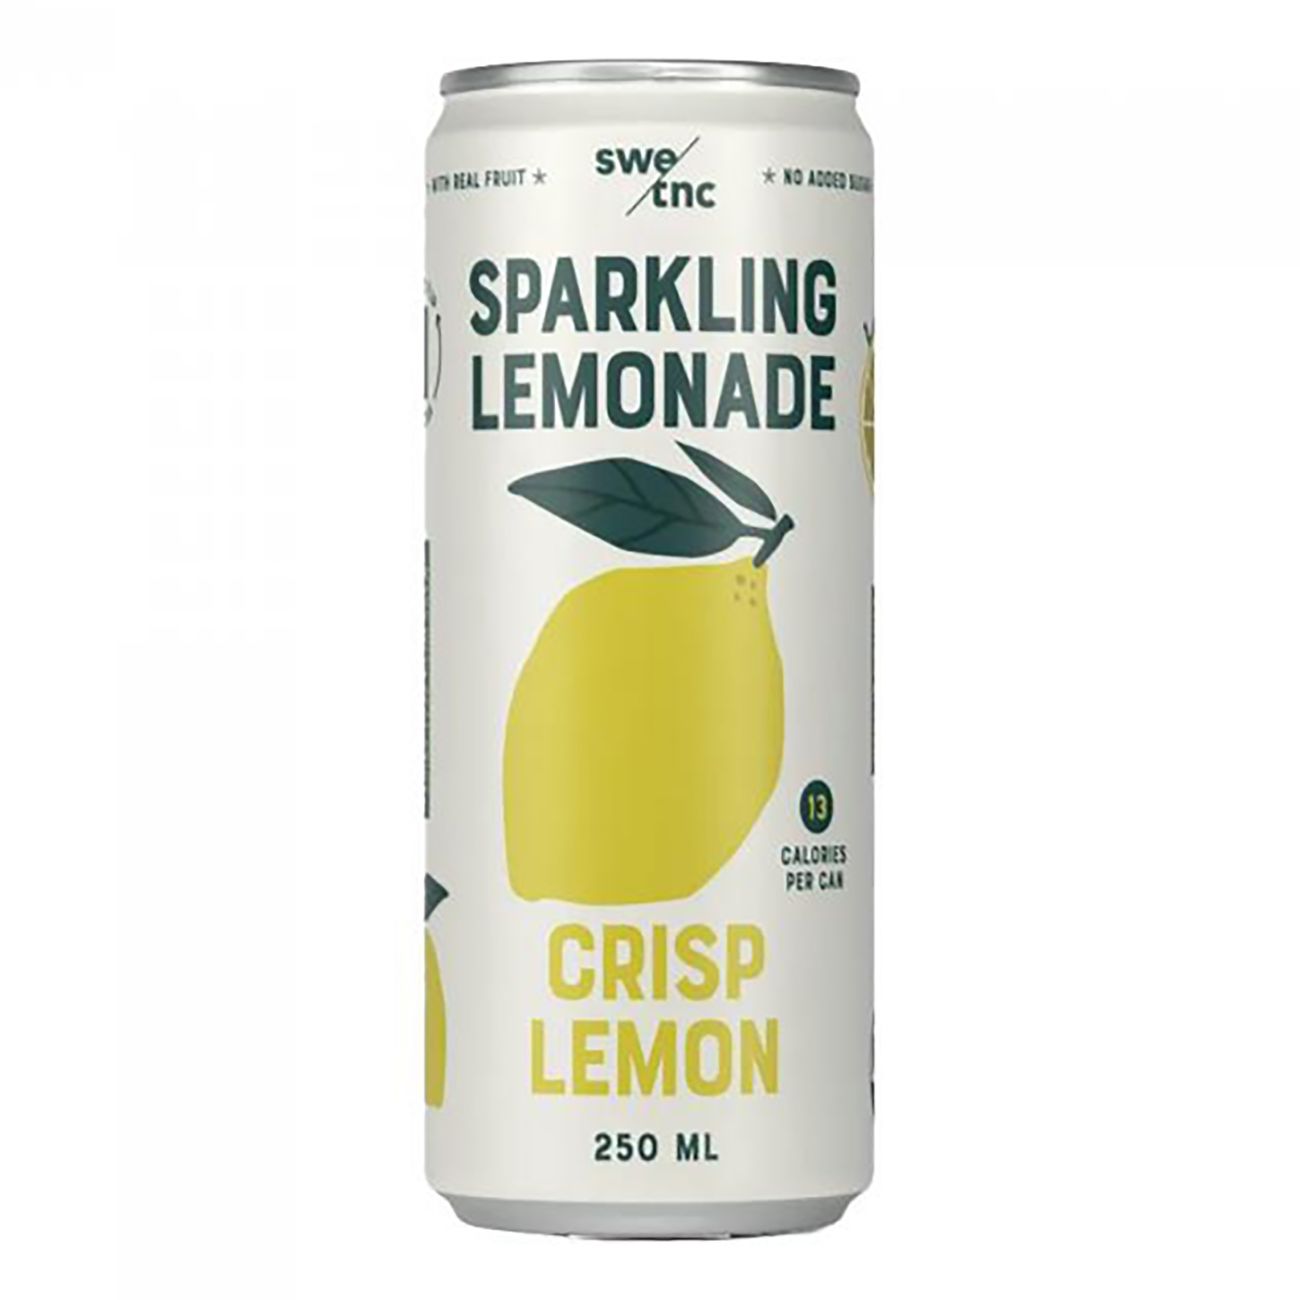 swedish-tonic-sparkling-lemonade-crisp-lemon-95375-1